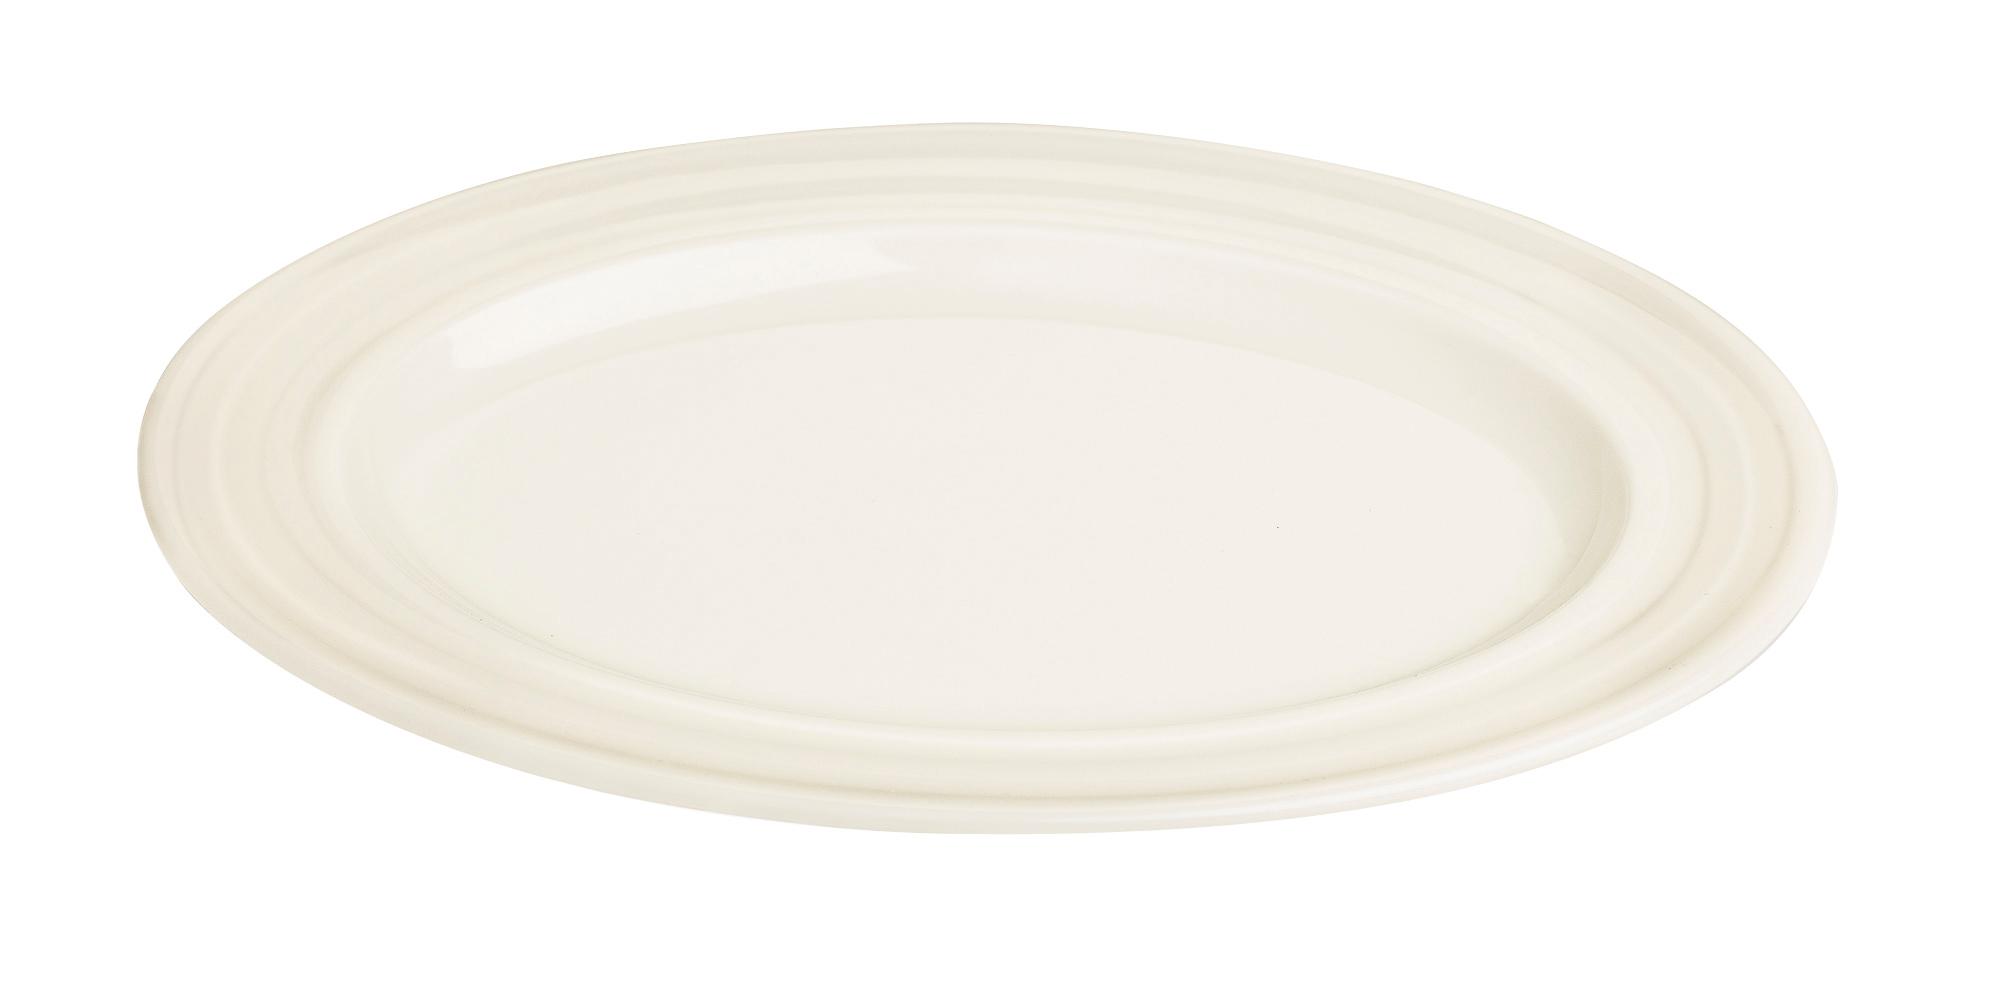 Perla flat plate, 300mm